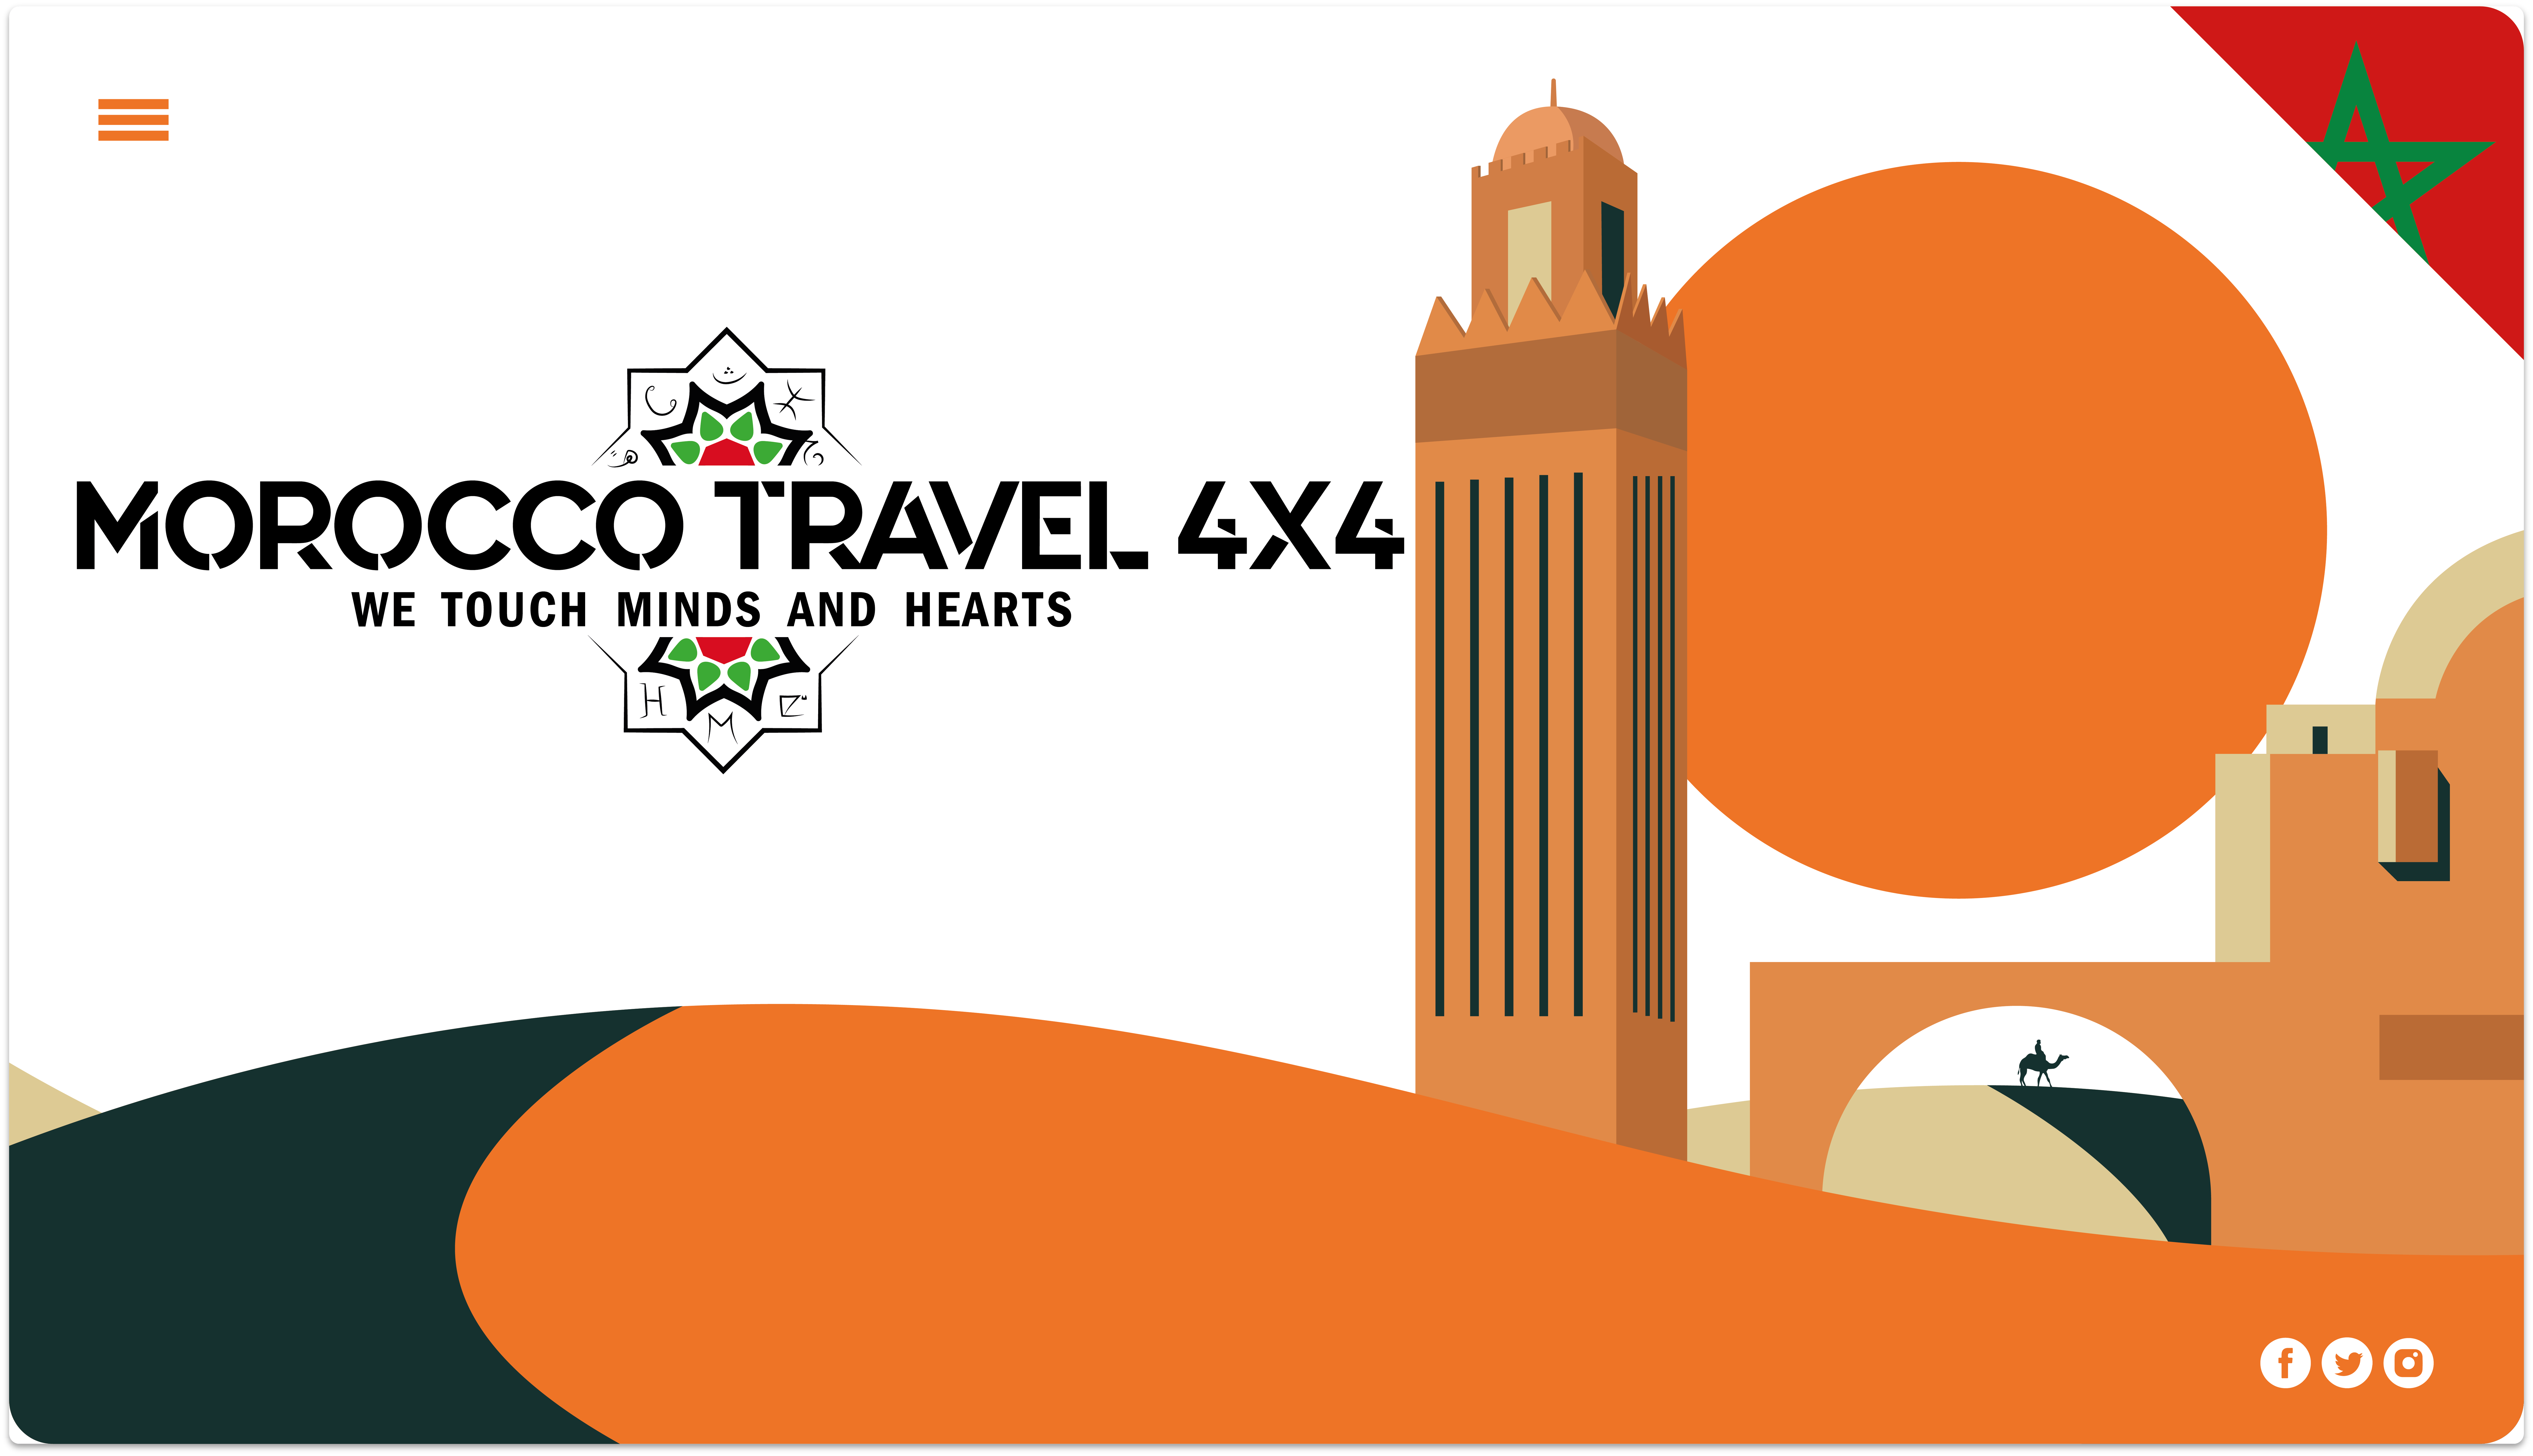 Morocco travel 4x4